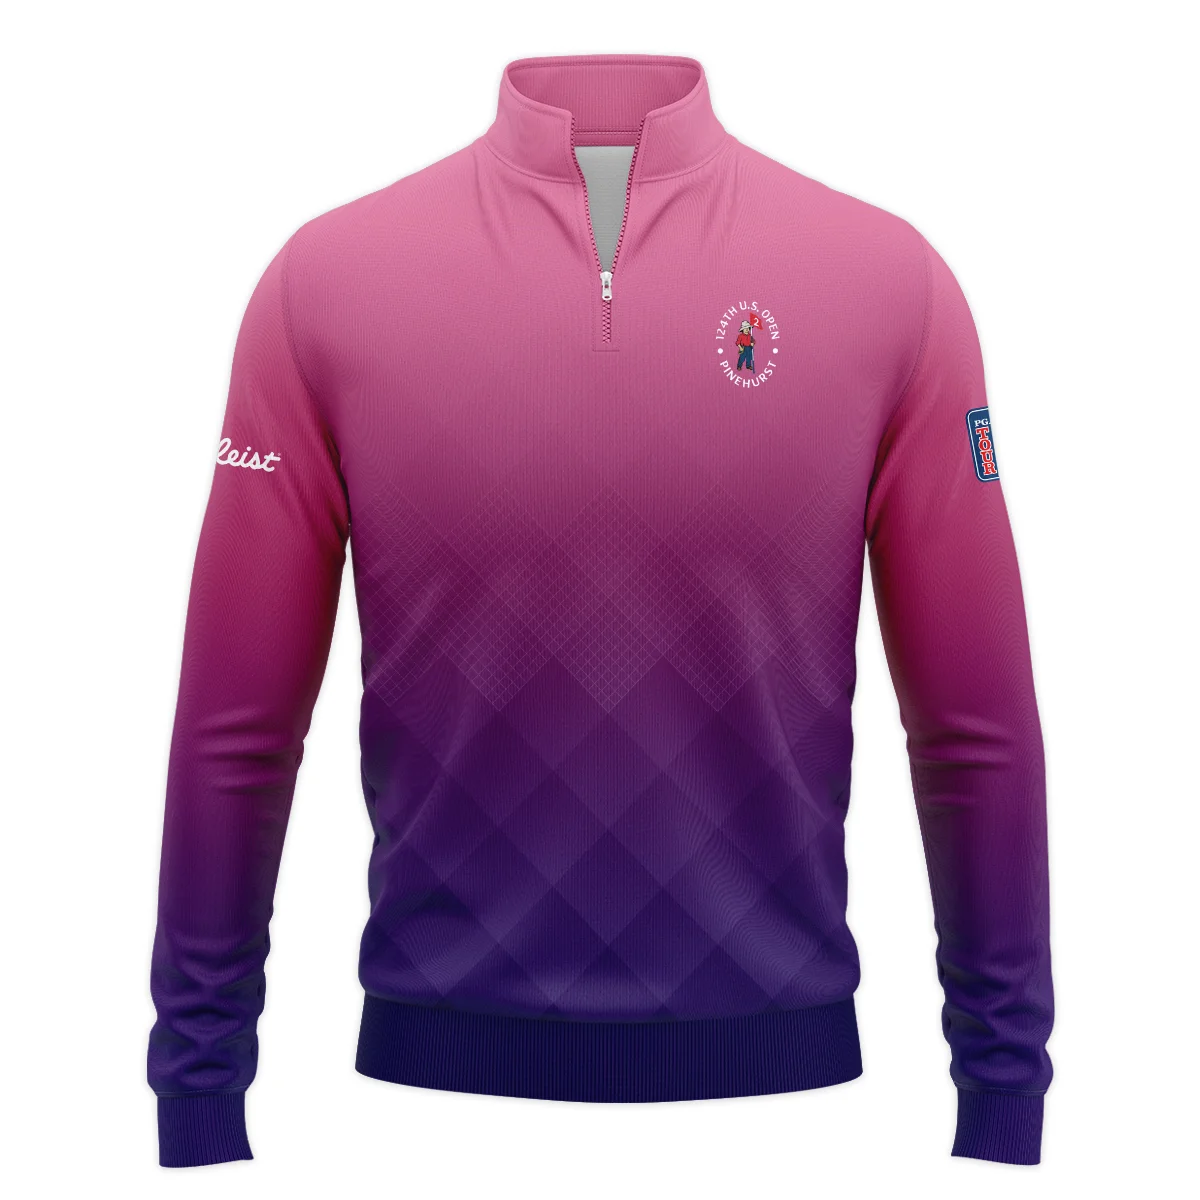 Titleist 124th U.S. Open Pinehurst Purple Pink Gradient Abstract Quarter-Zip Polo Shirt